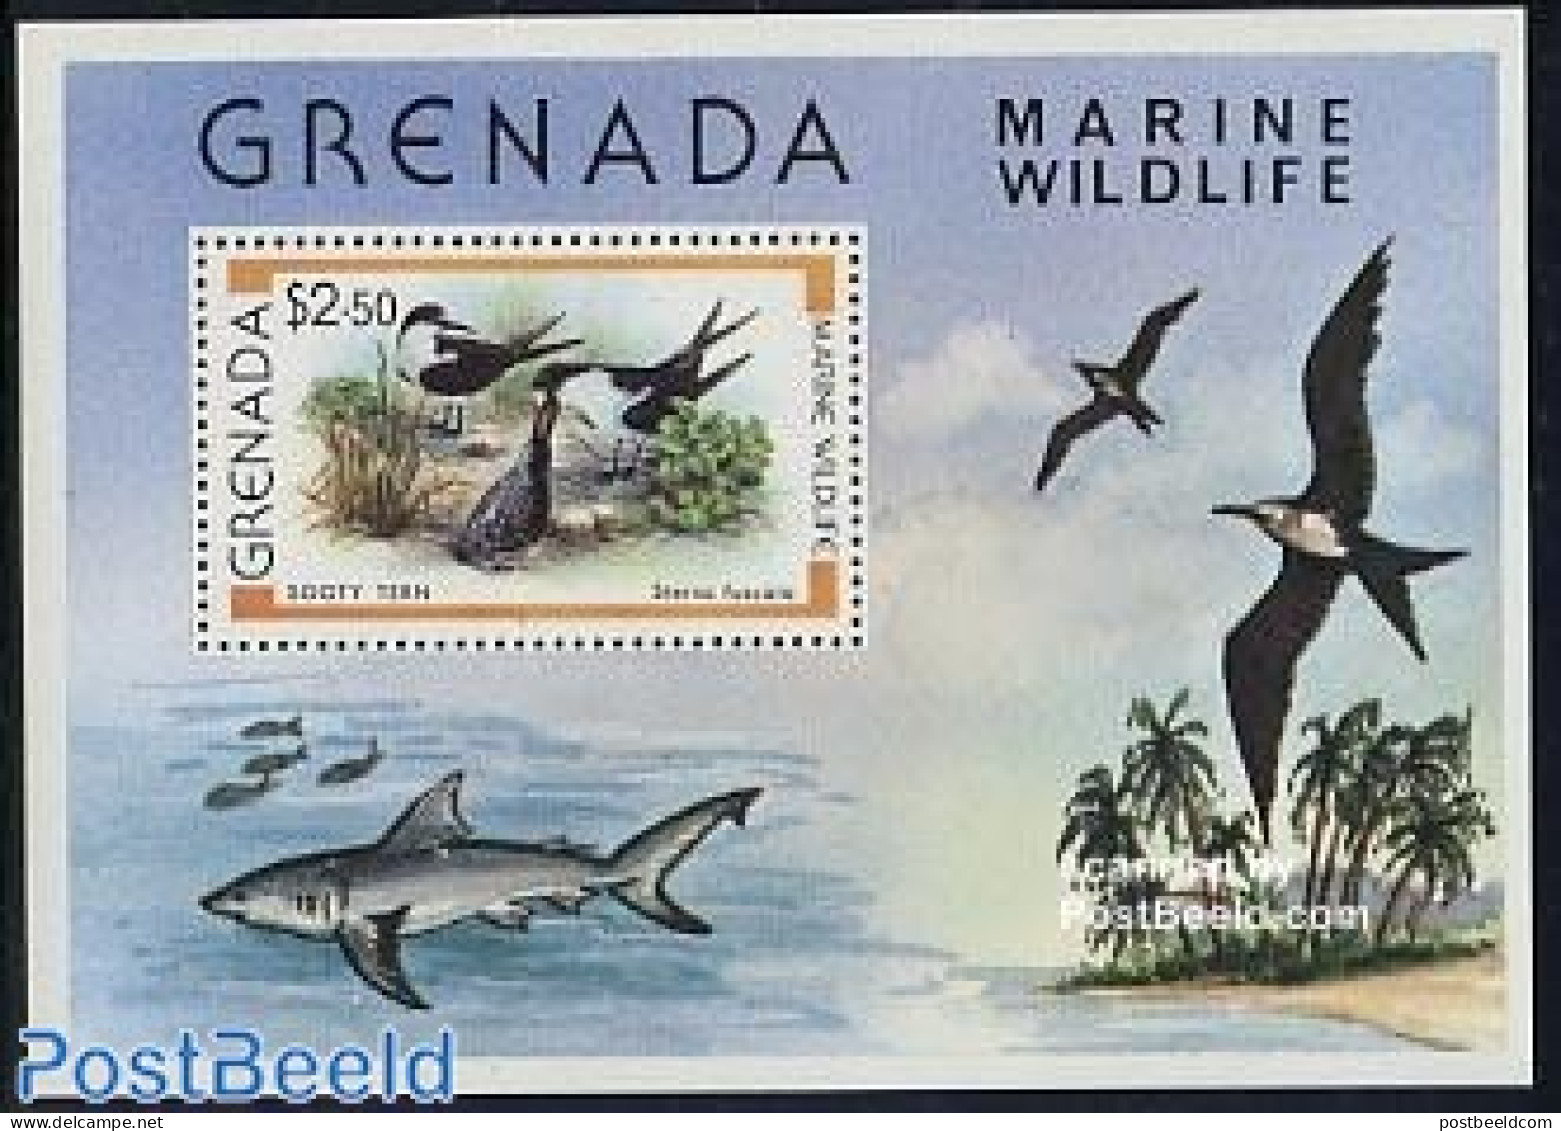 Grenada 1979 Fauna S/s, Mint NH, Nature - Birds - Fish - Sharks - Poissons